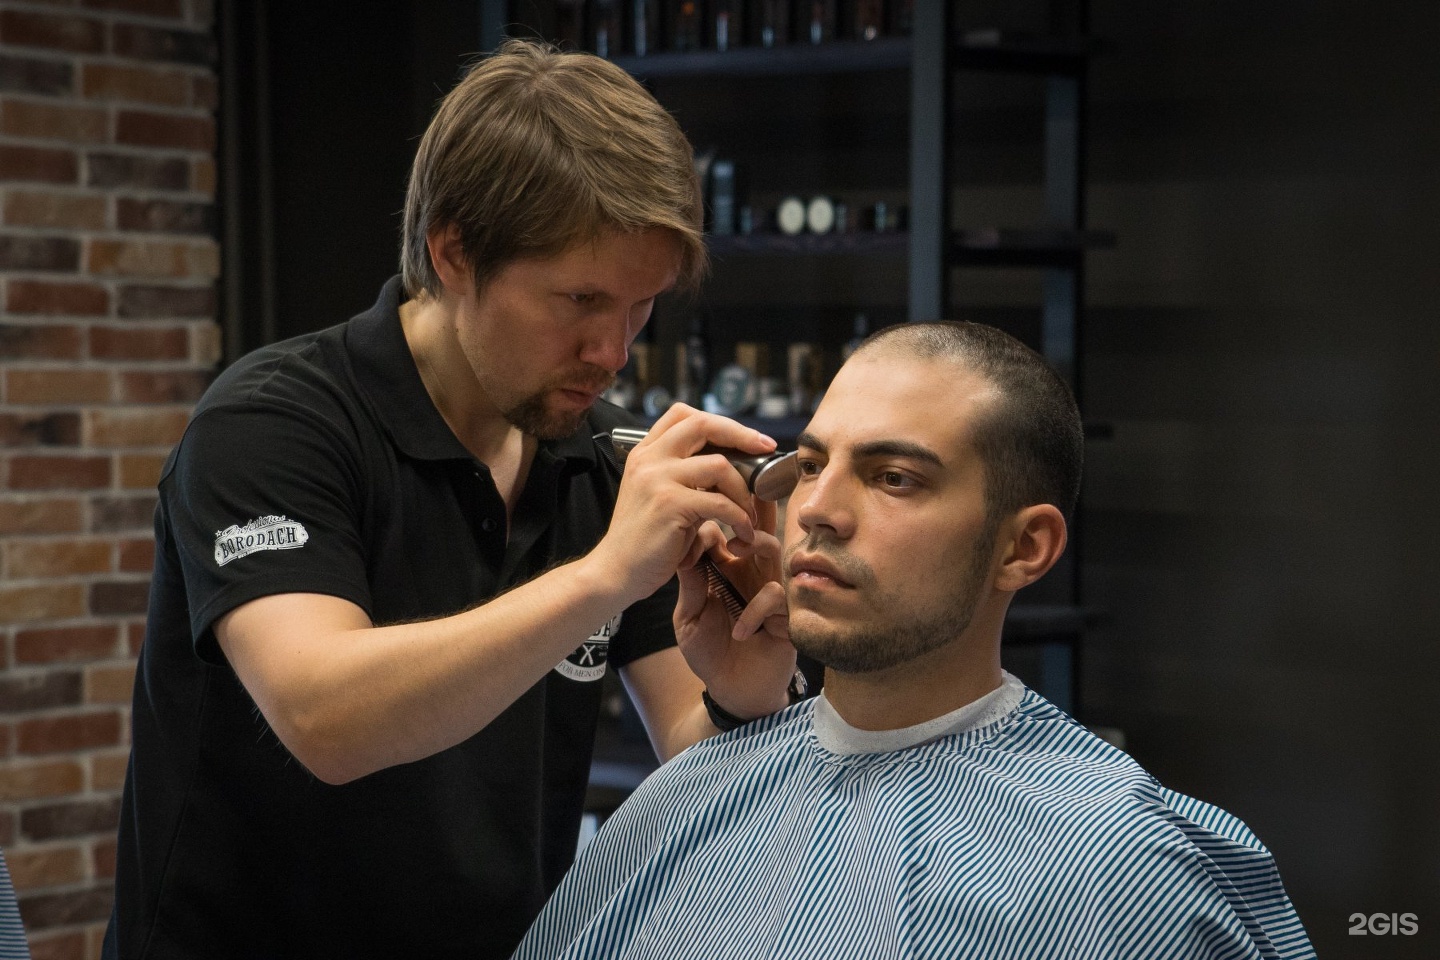 Borodach мужской салон бритья и стрижки